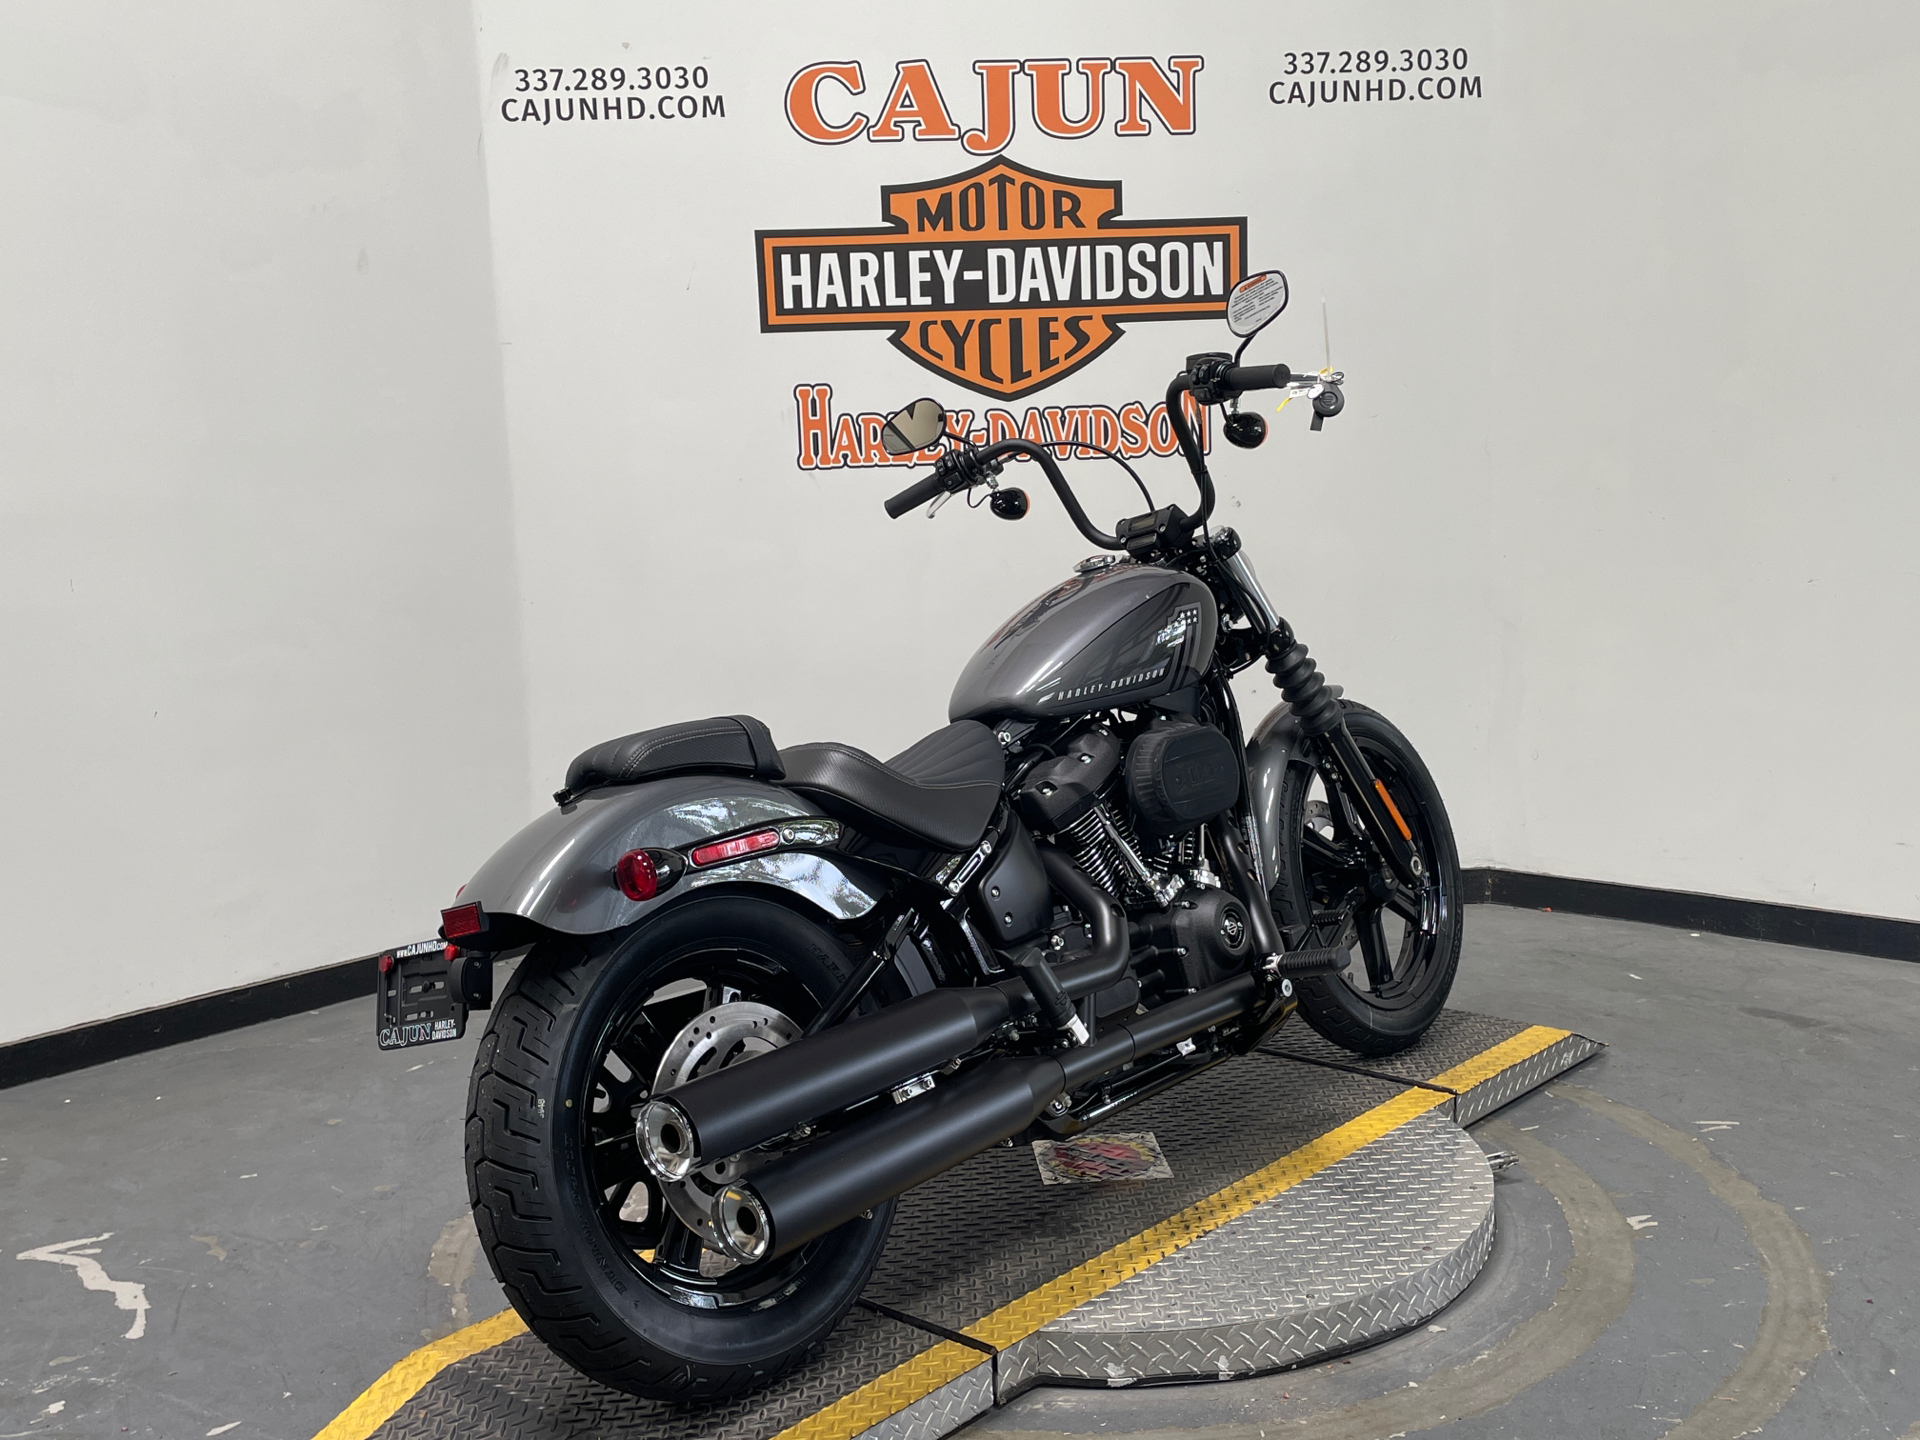 2022 Harley-Davidson Street Bob available now - Photo 6